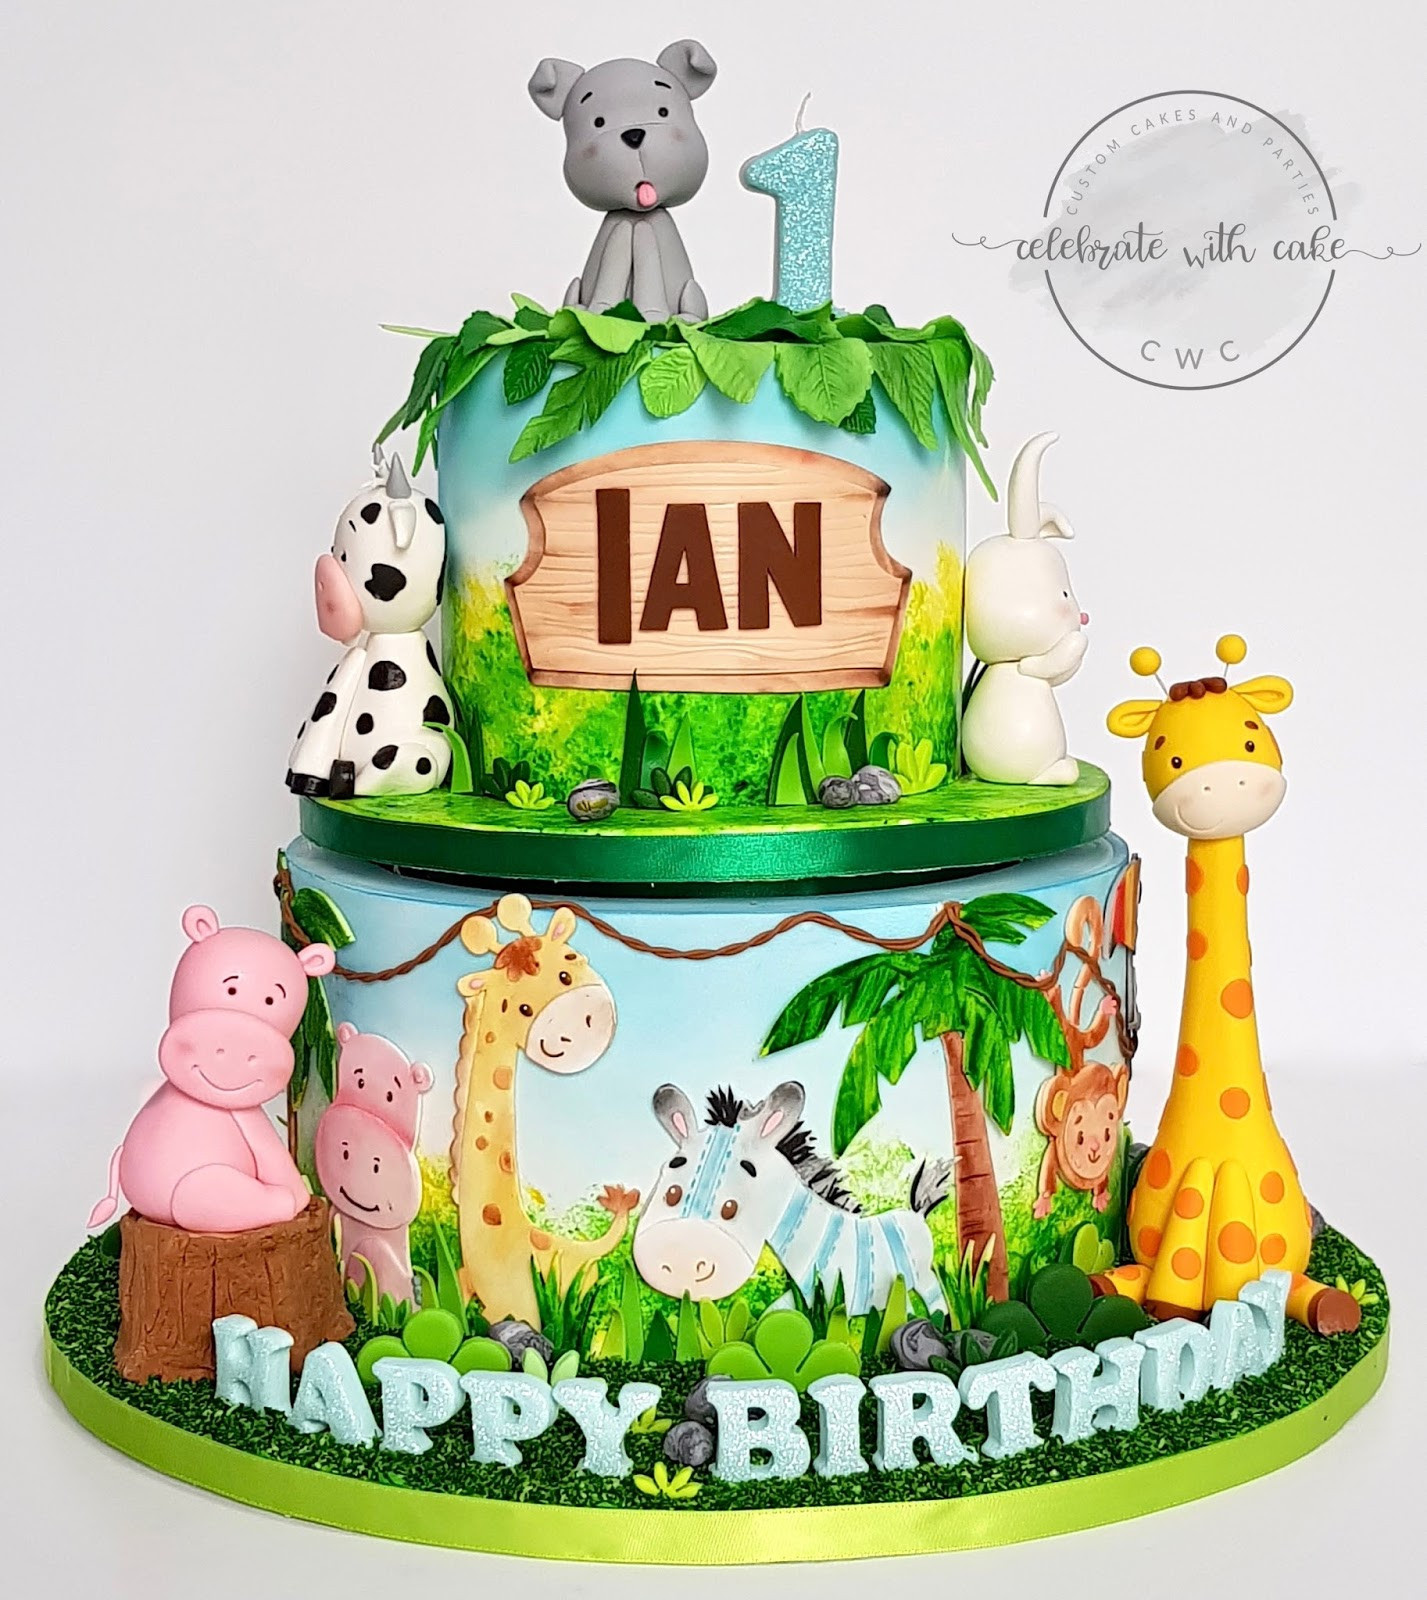 Safari Birthday Cake
 Celebrate with Cake Safari themed Rotating Cake 1st